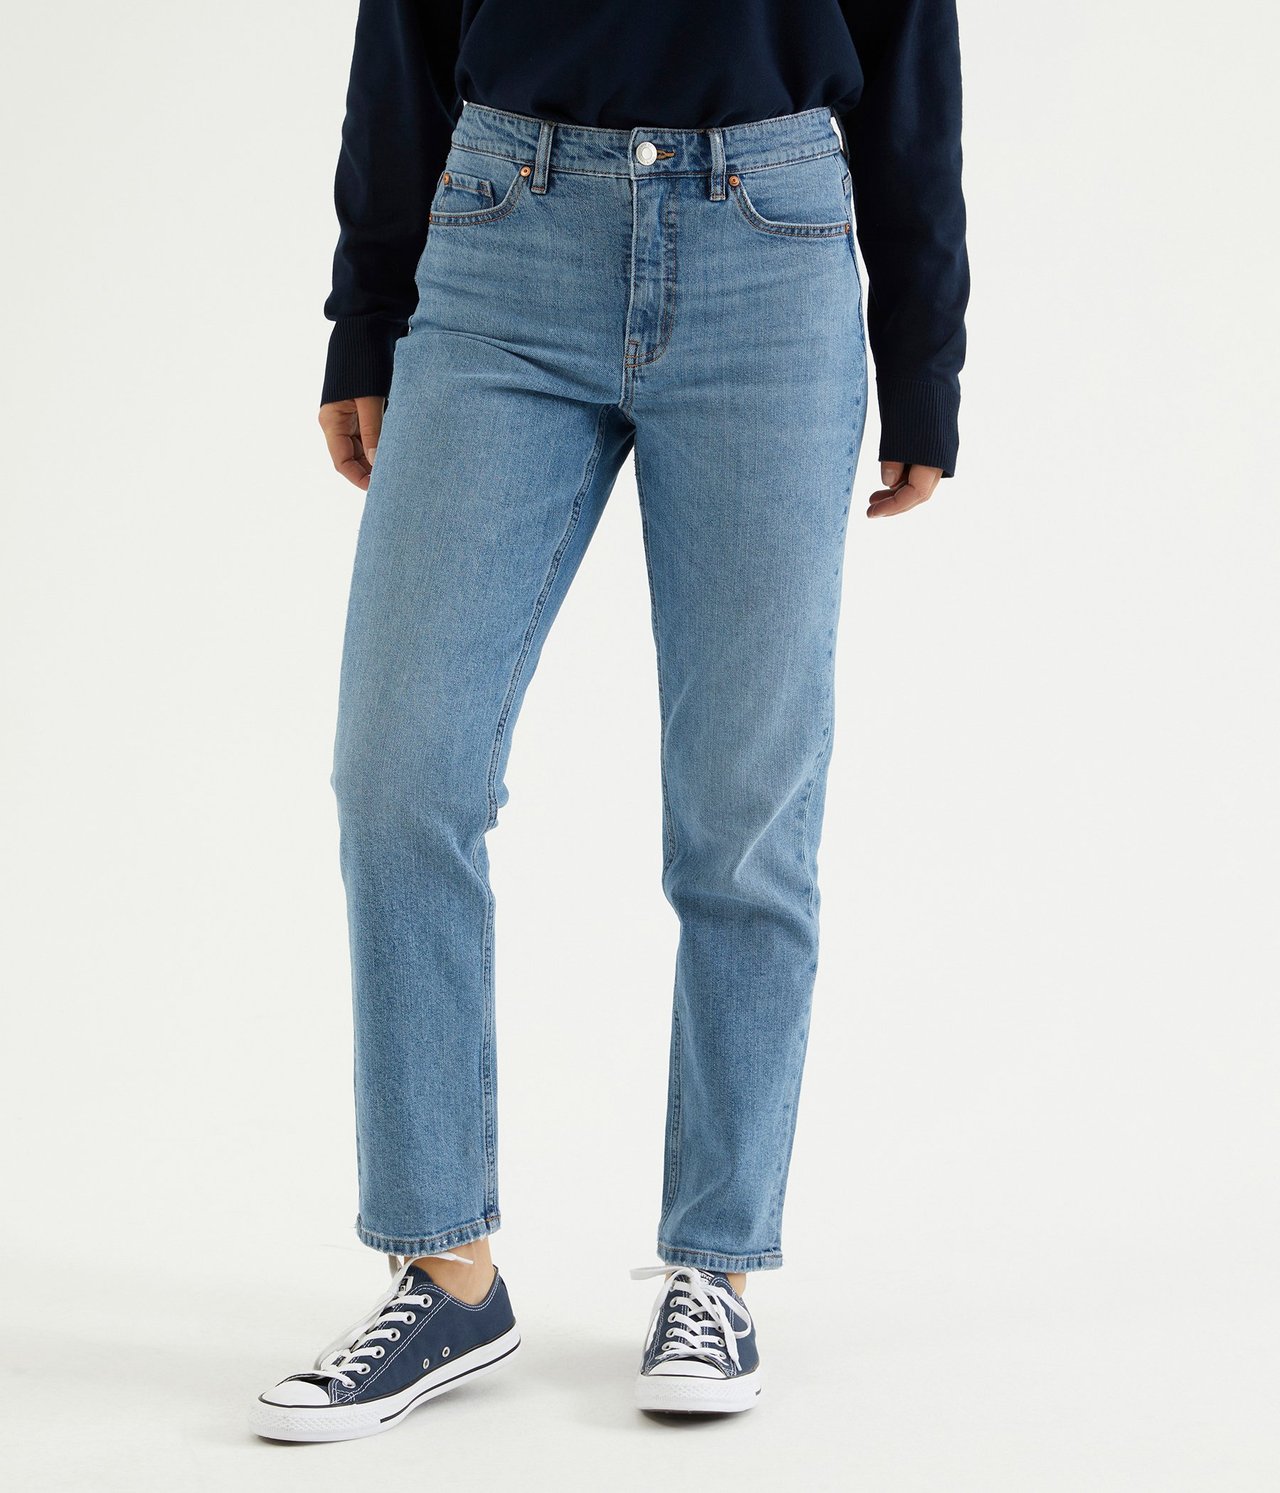 Jeans high waist tapered Lys denim - 34 - 3